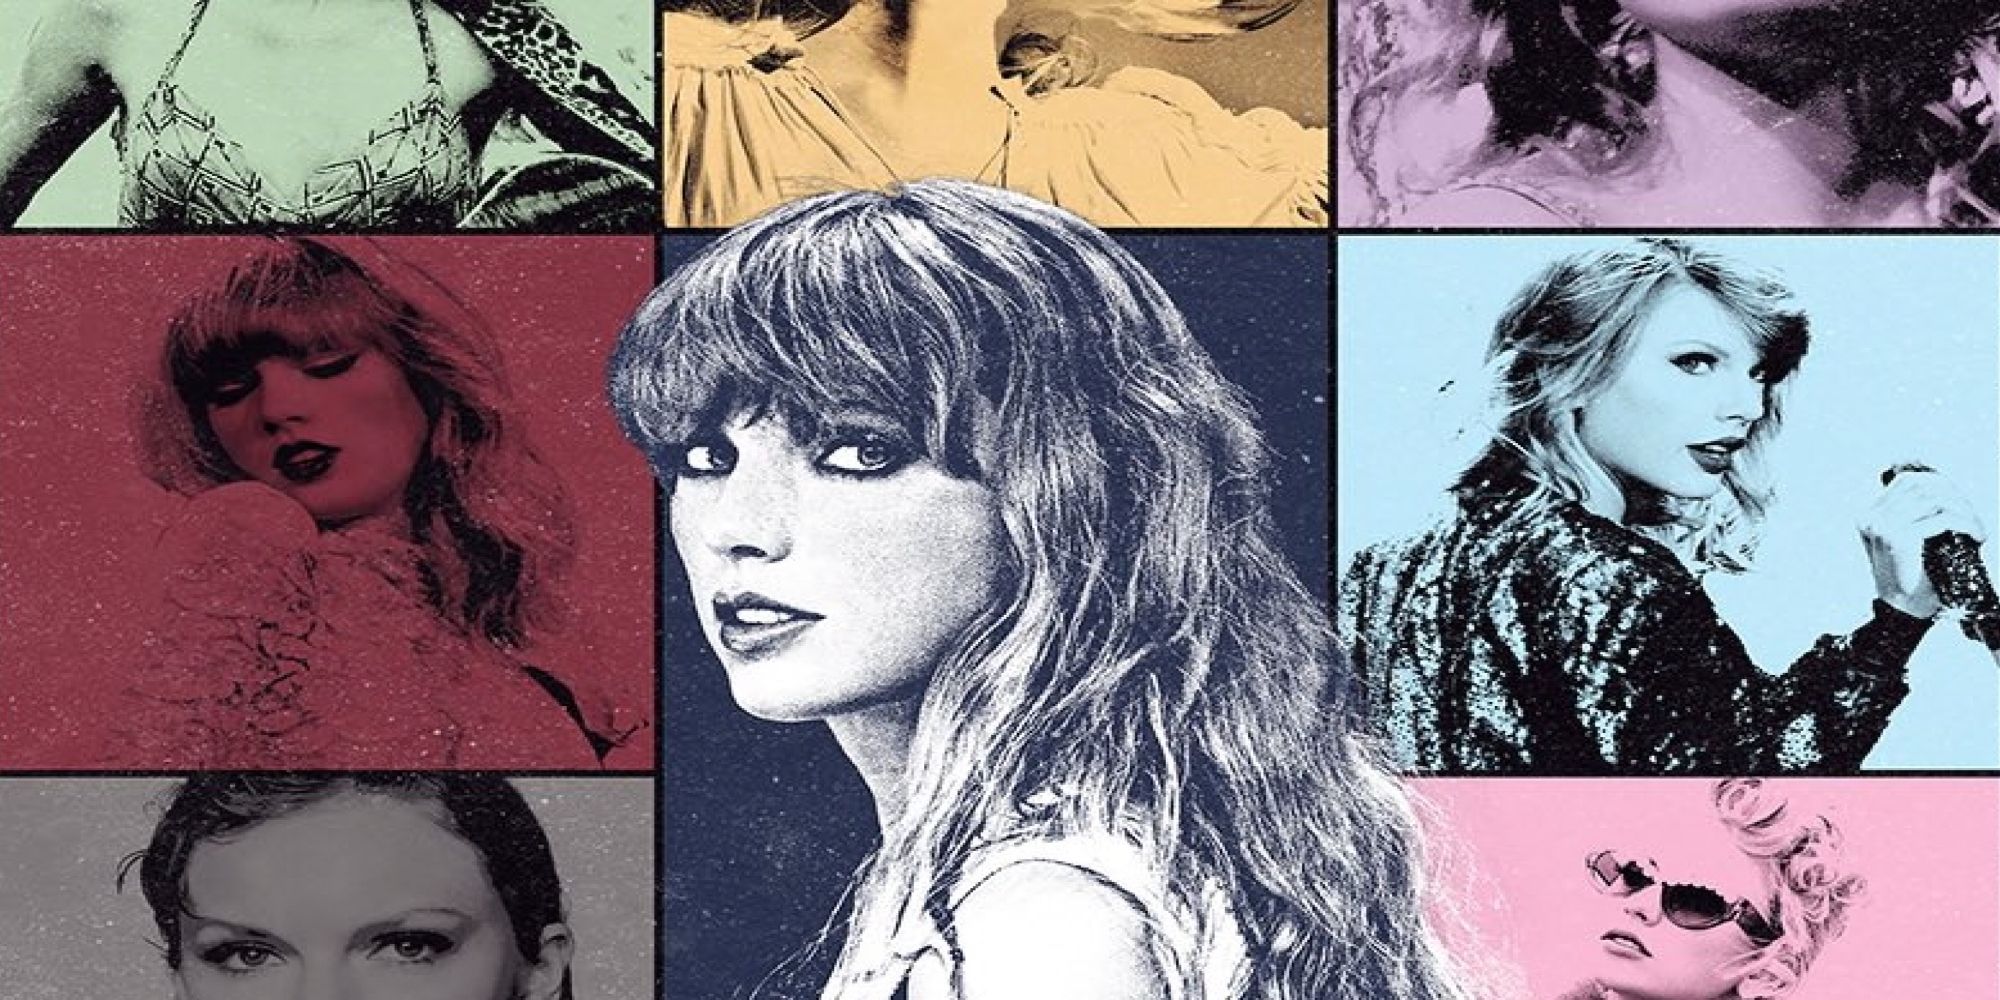 Taylor Swift Eras Tour Poster Template